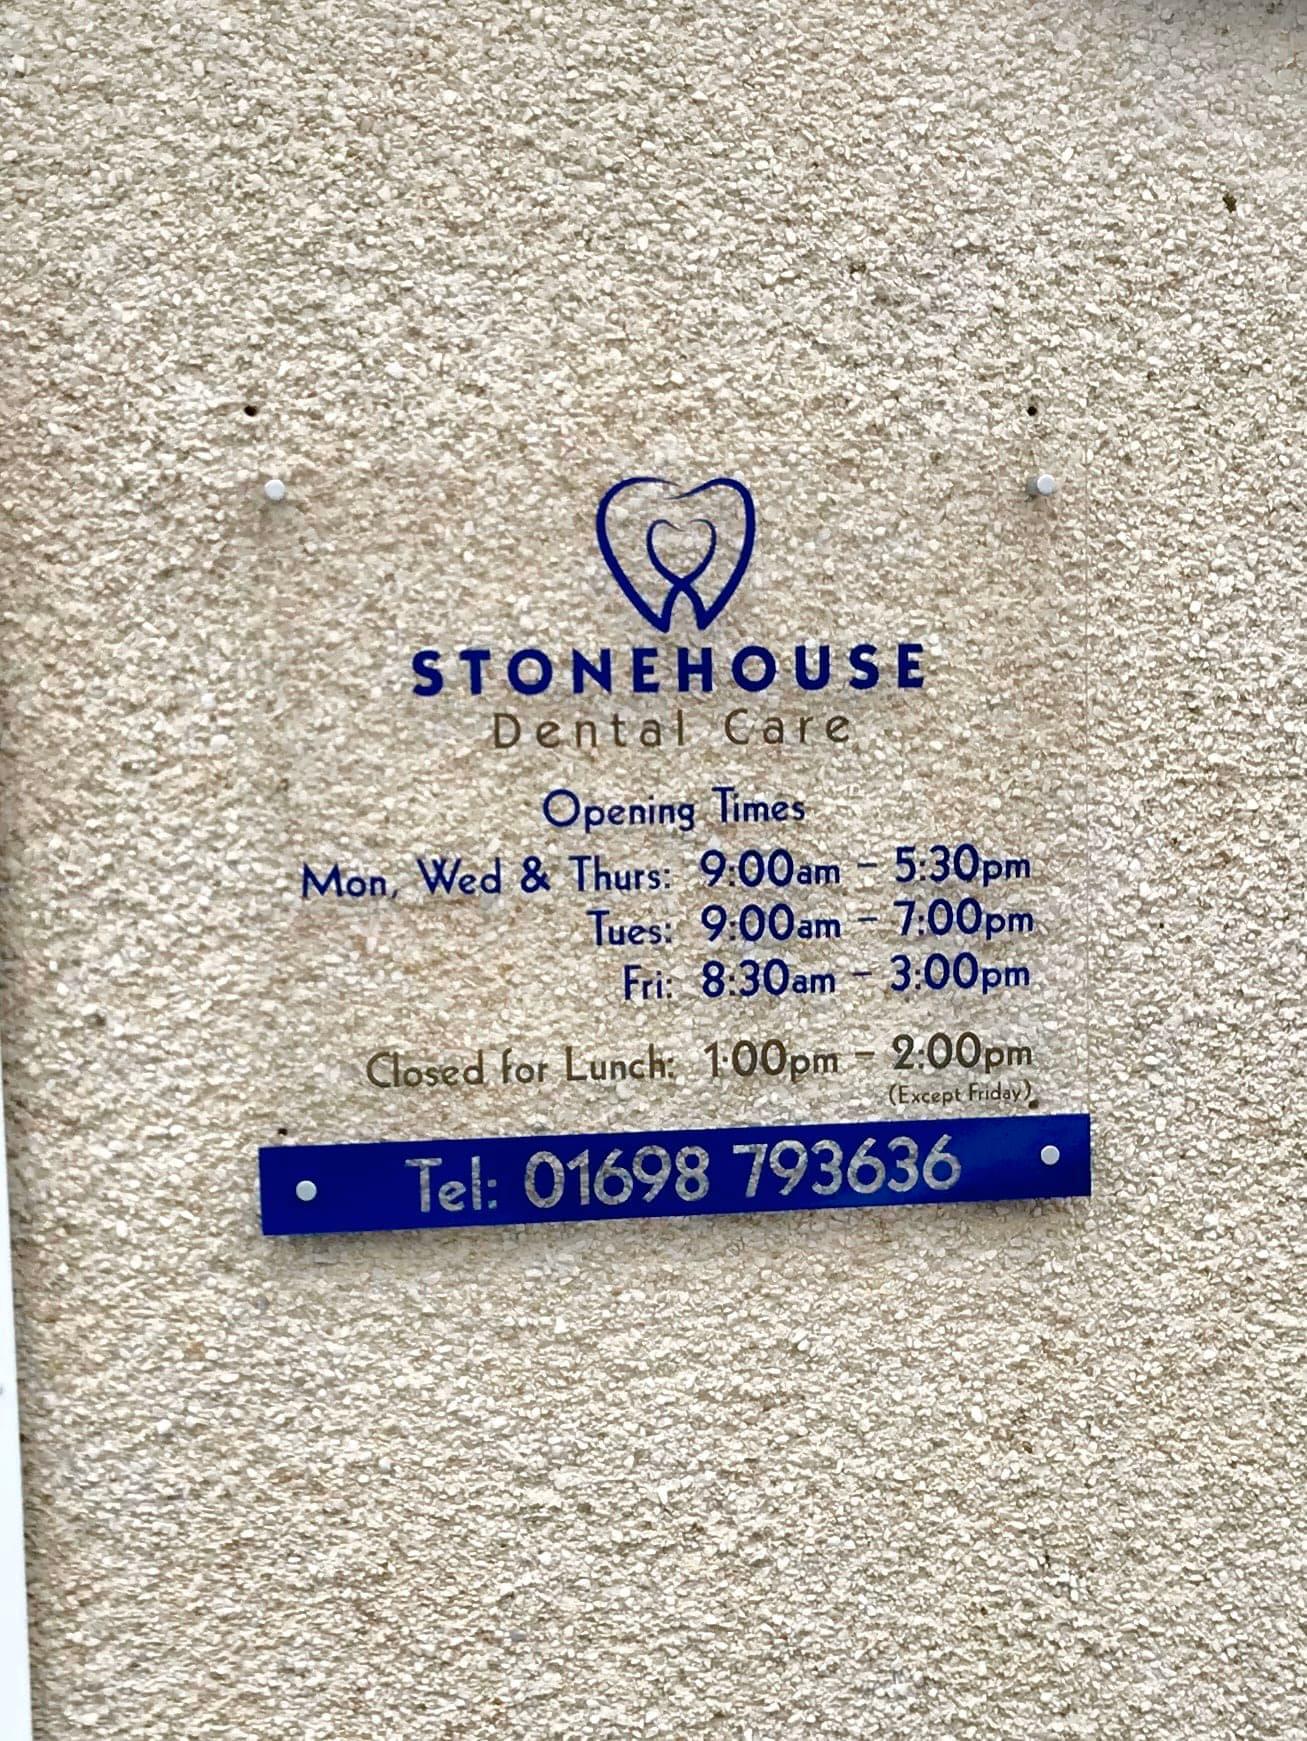 Stonehouse Dental Care Larkhall 01698 793636